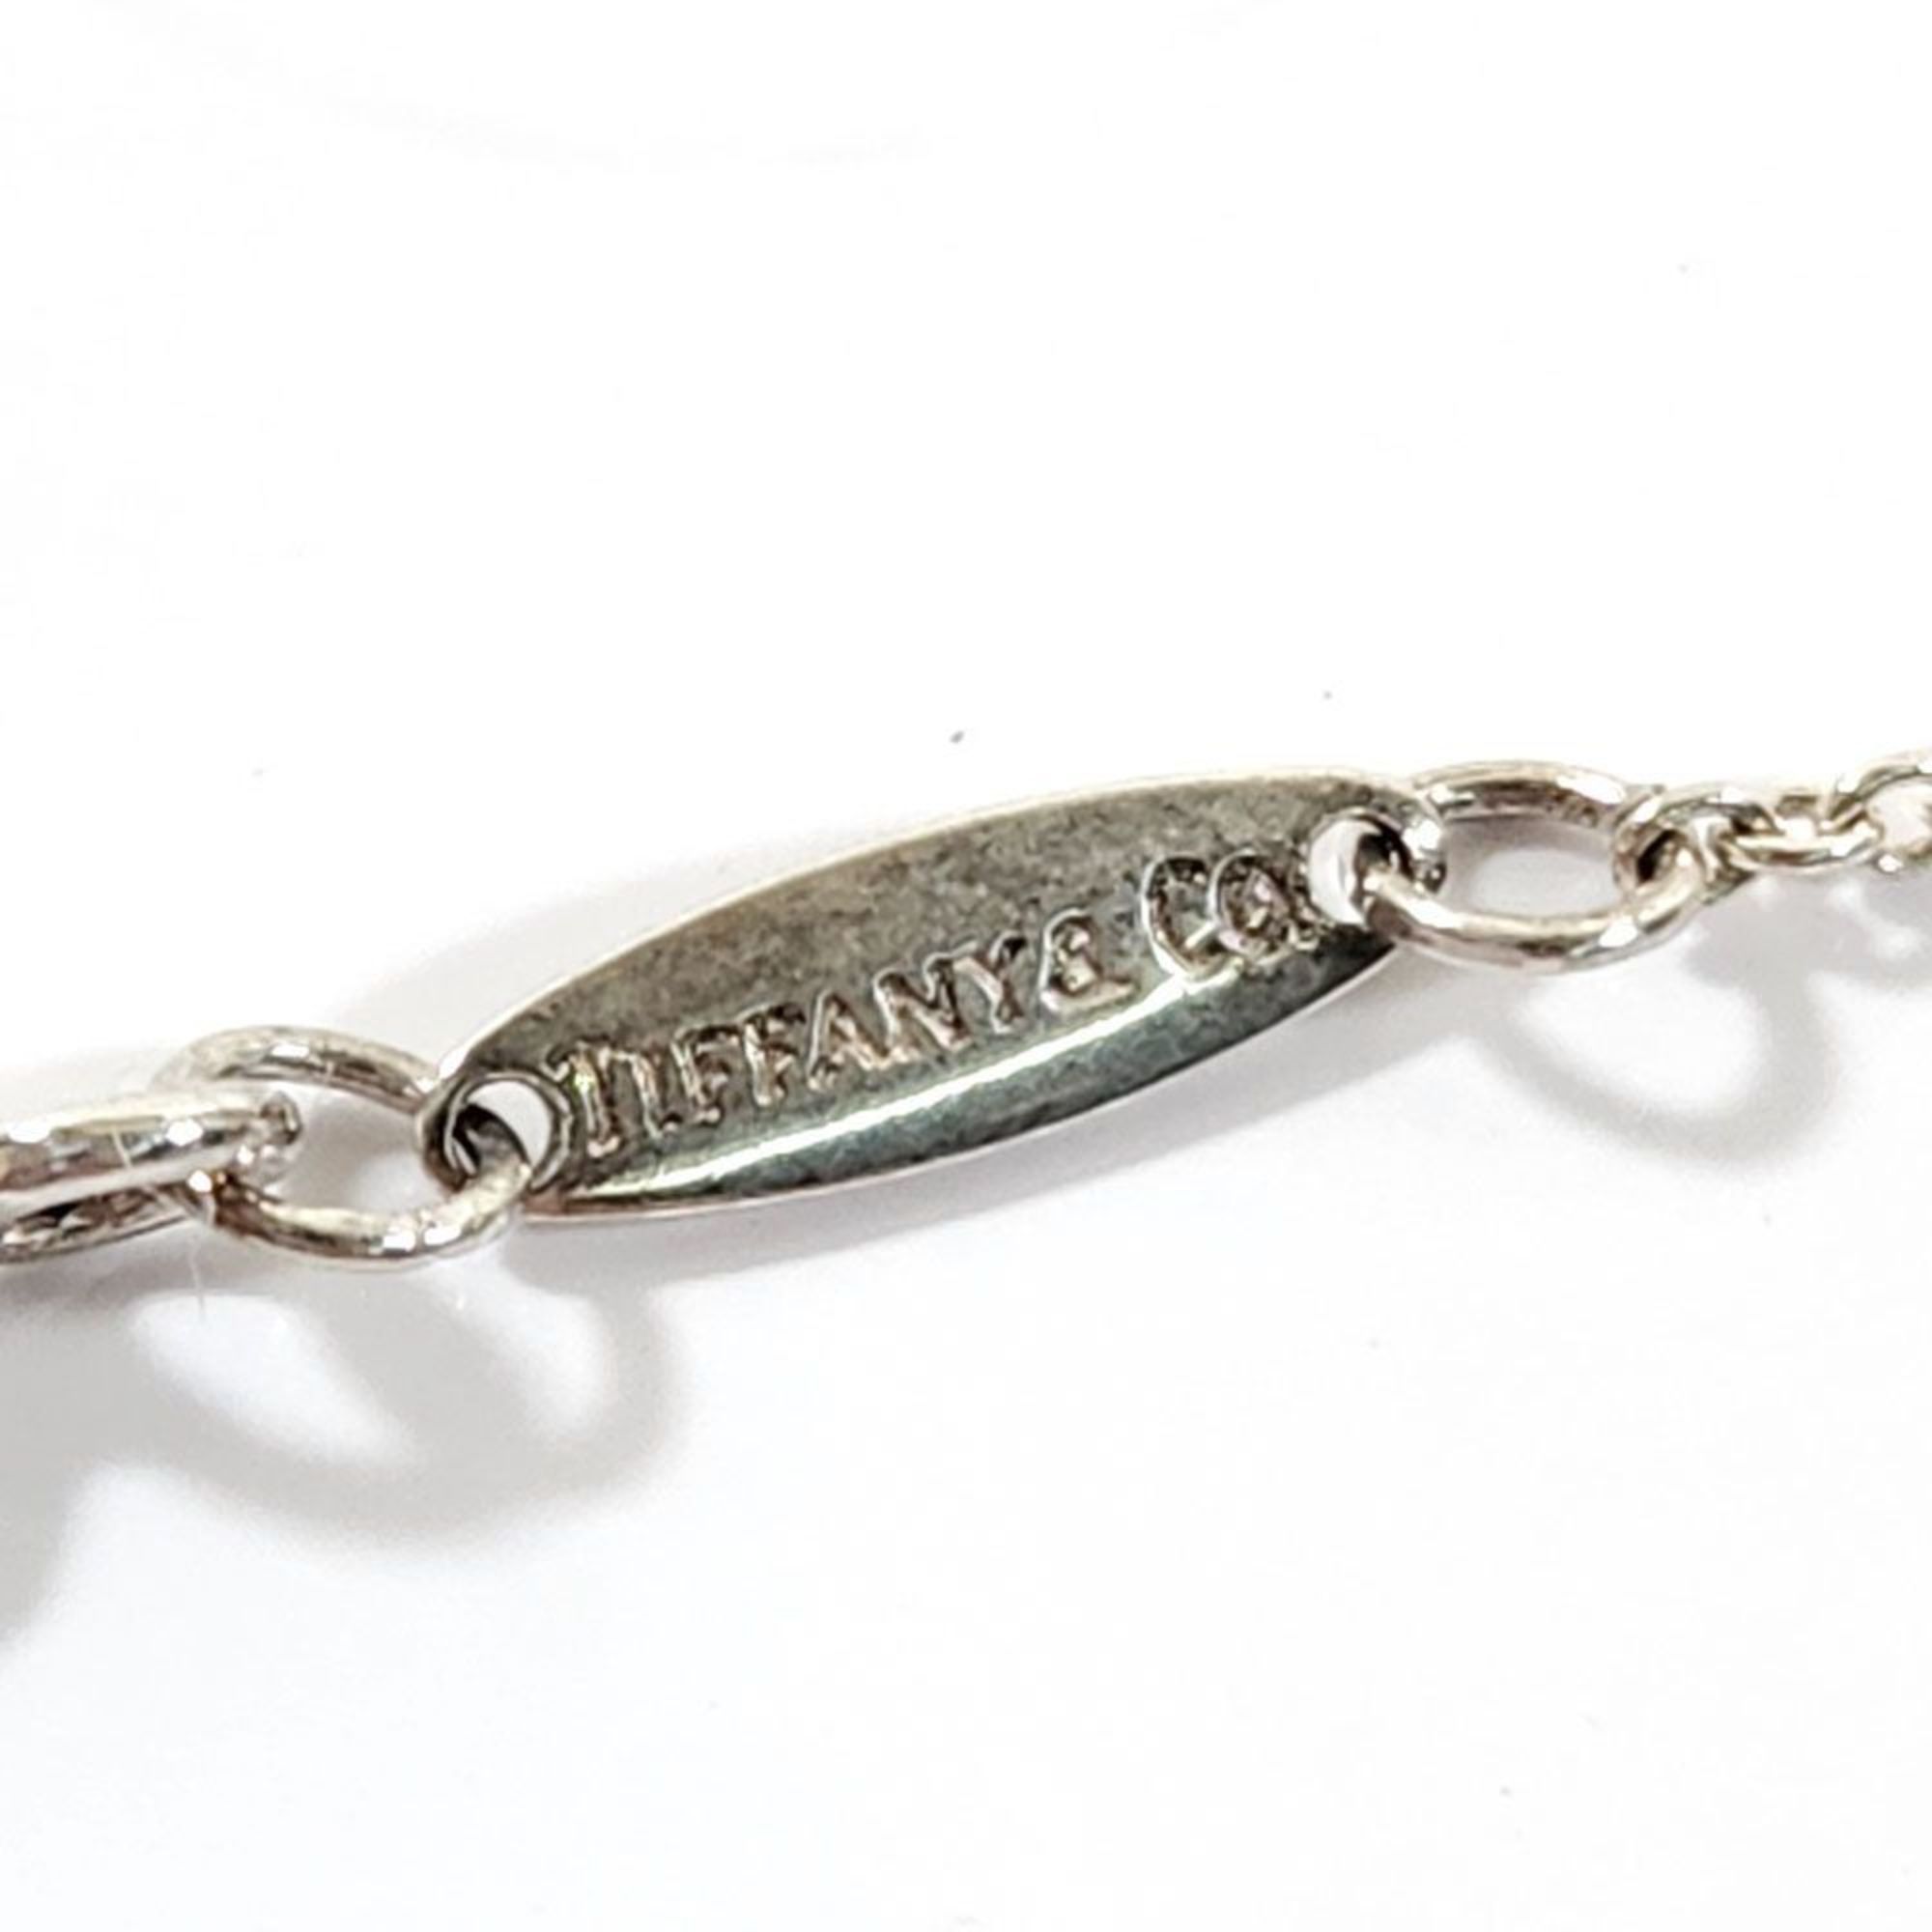 Tiffany Teardrop Necklace Pendant SV Sterling Silver Women's Large Size 925 Droplet